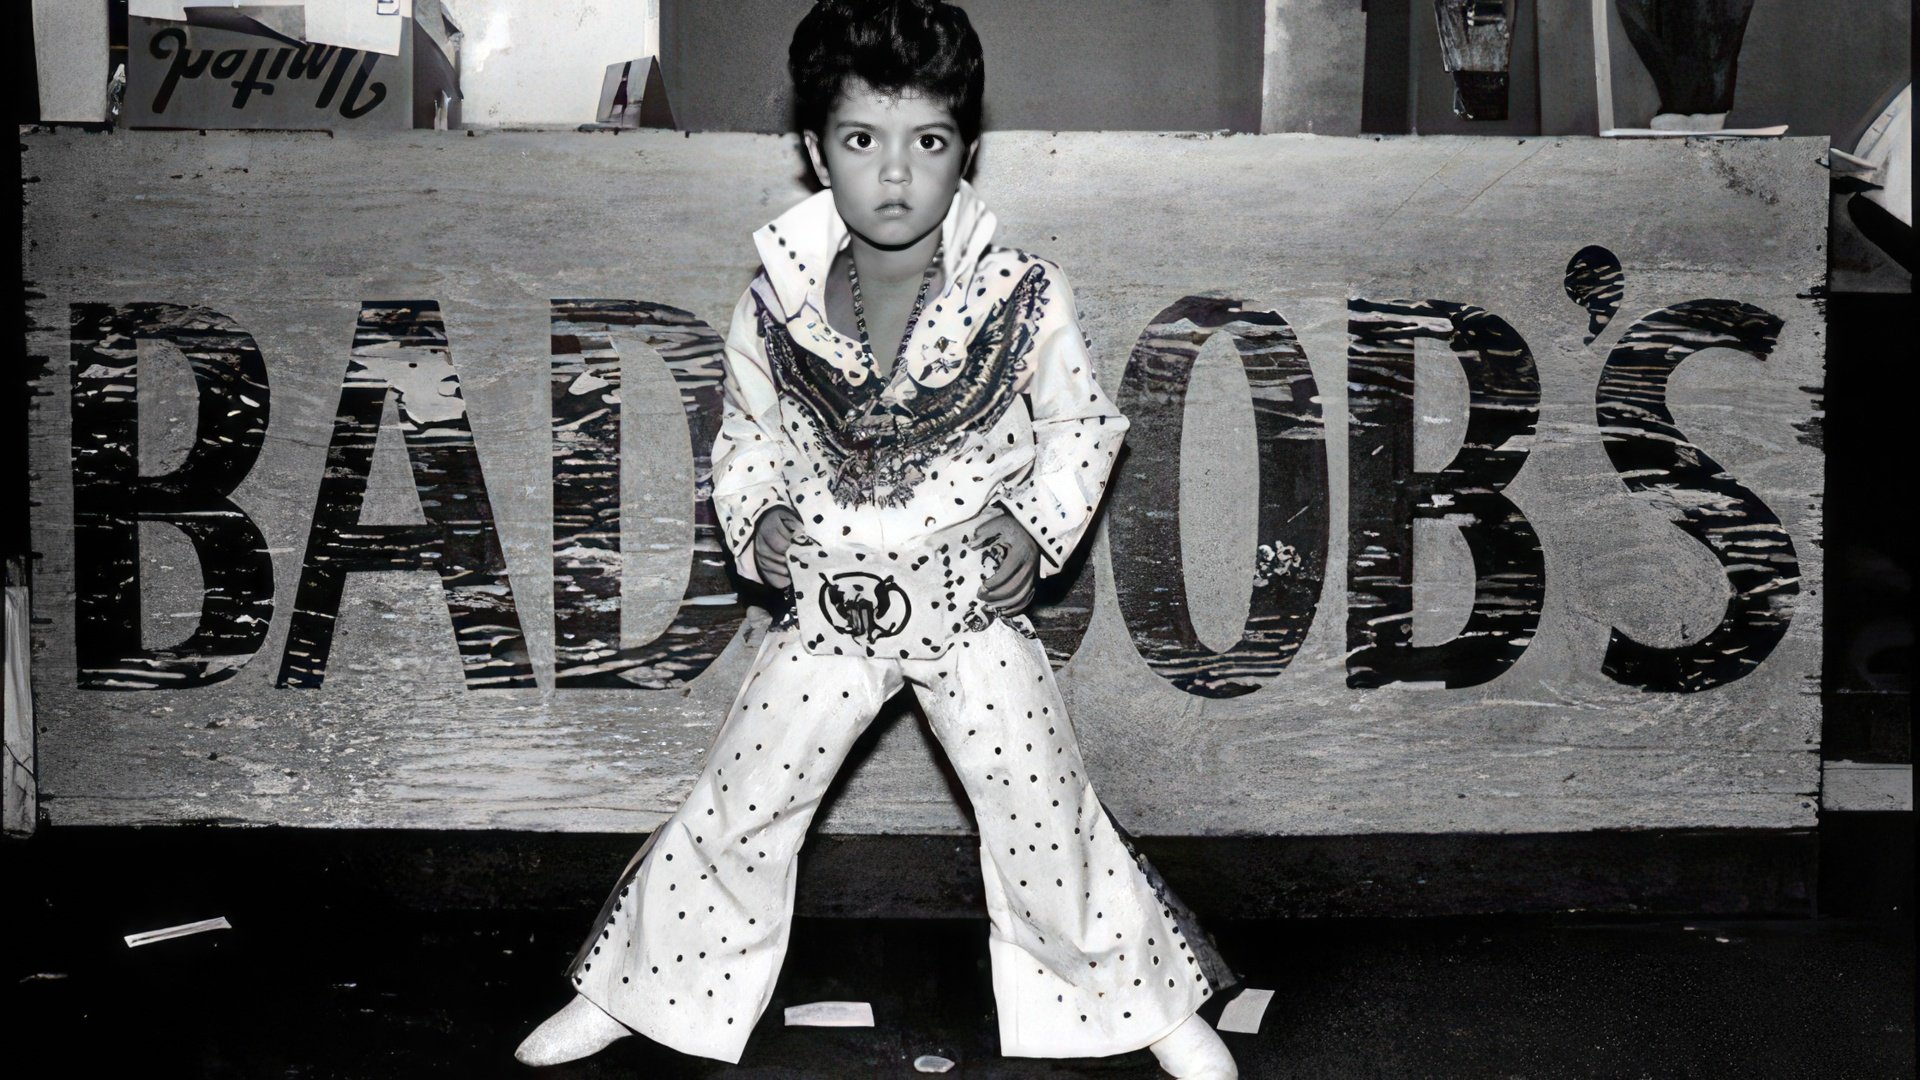 One of little Bruno’s idols was Elvis Presley